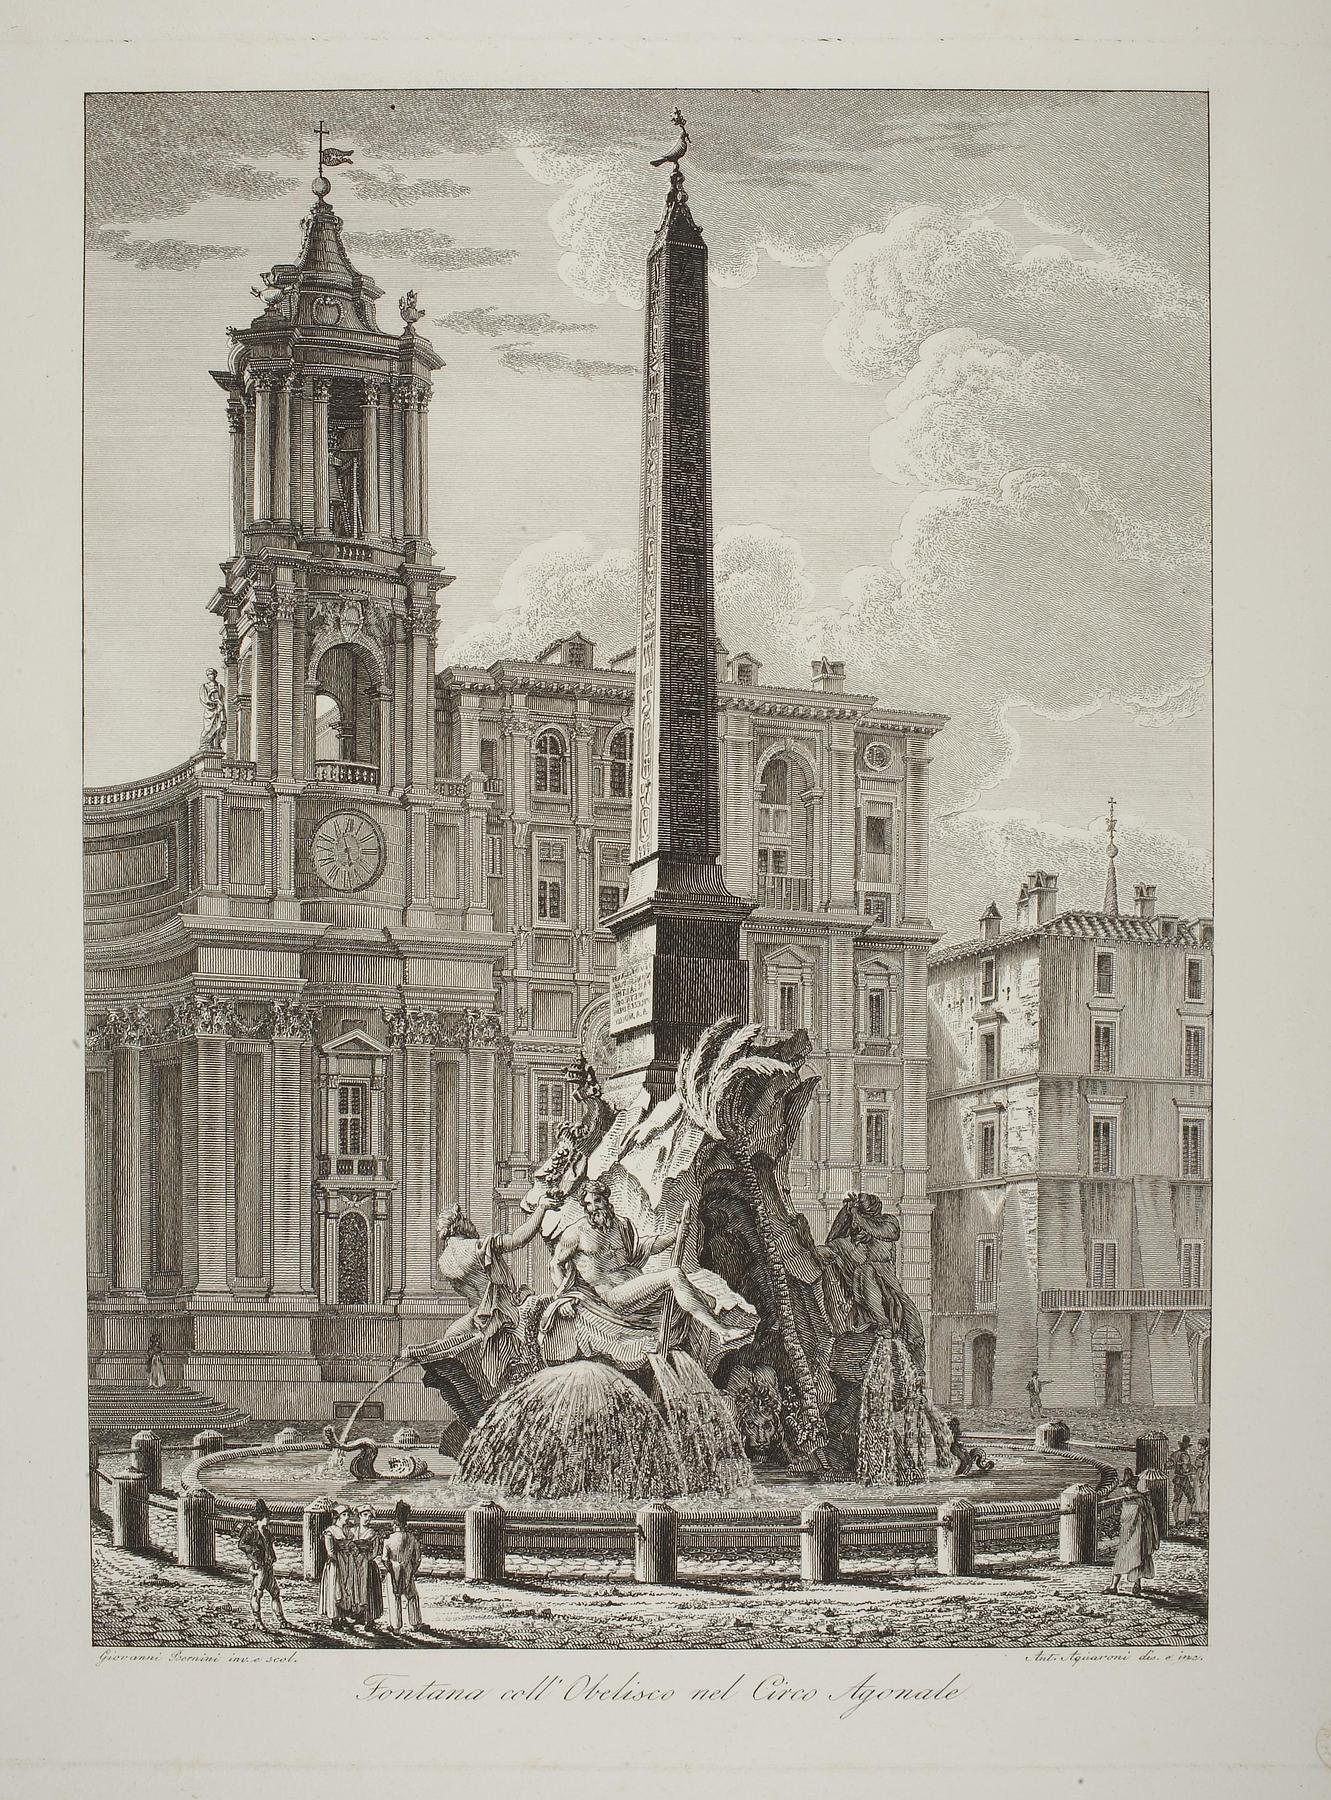 Fontana coll'Obelisco nel circo Agonale (Fountain of the Four Rivers), E348